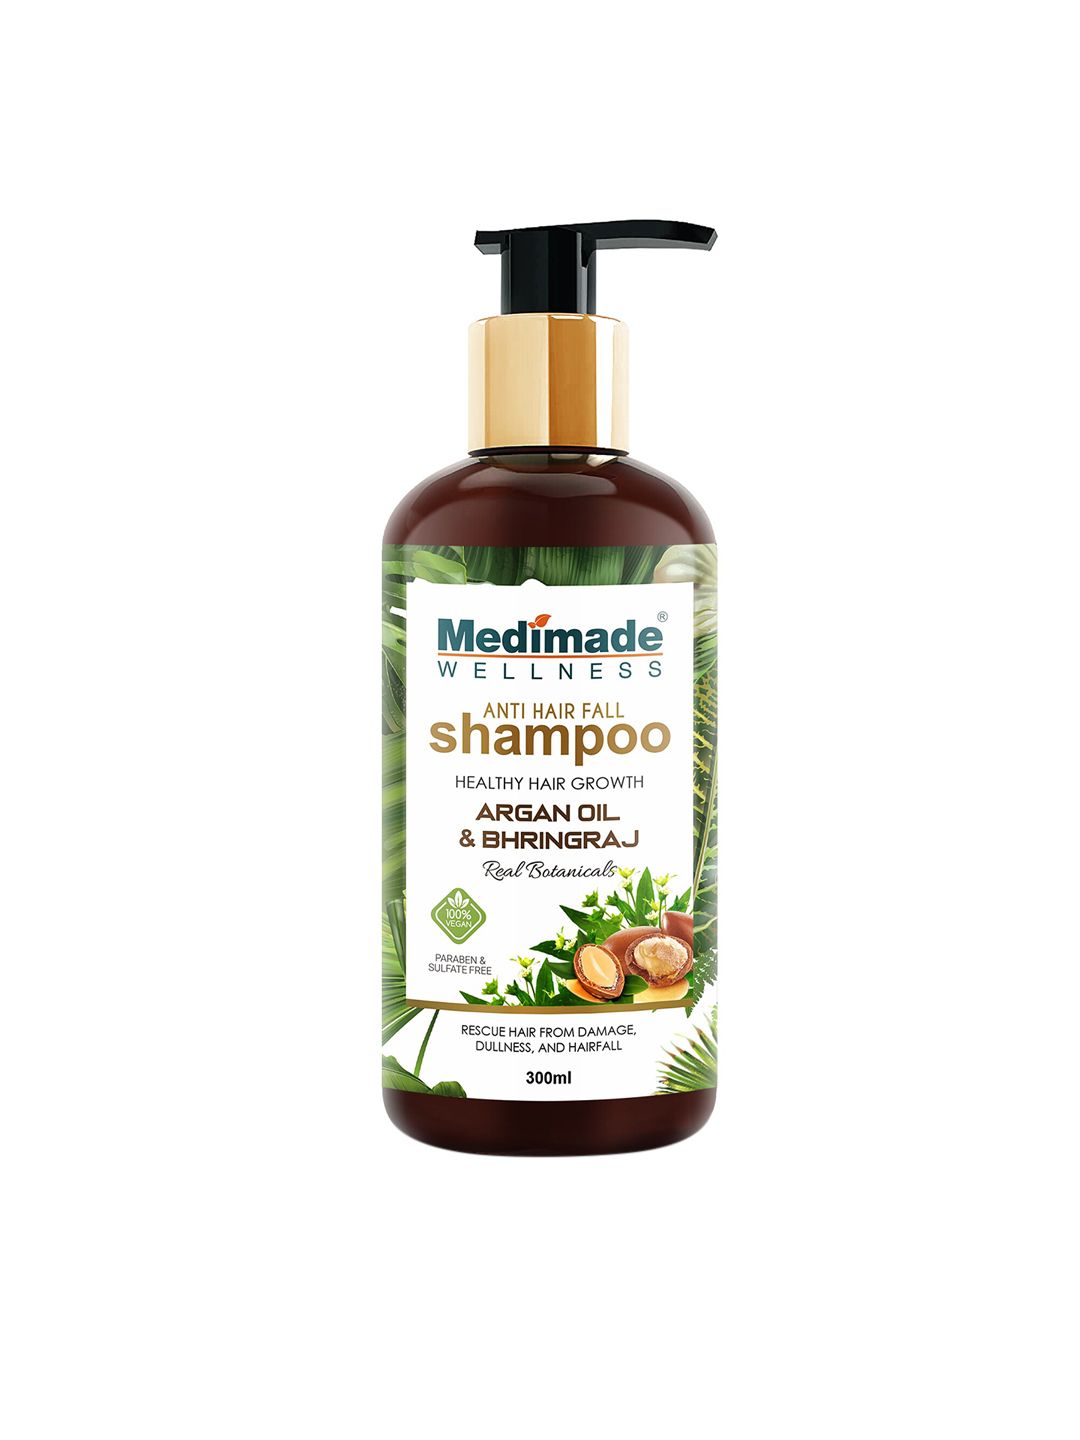 Medimade Anti-Hair Fall Shampoo with Argan Oil & Bhringraj - 300 ml Price in India